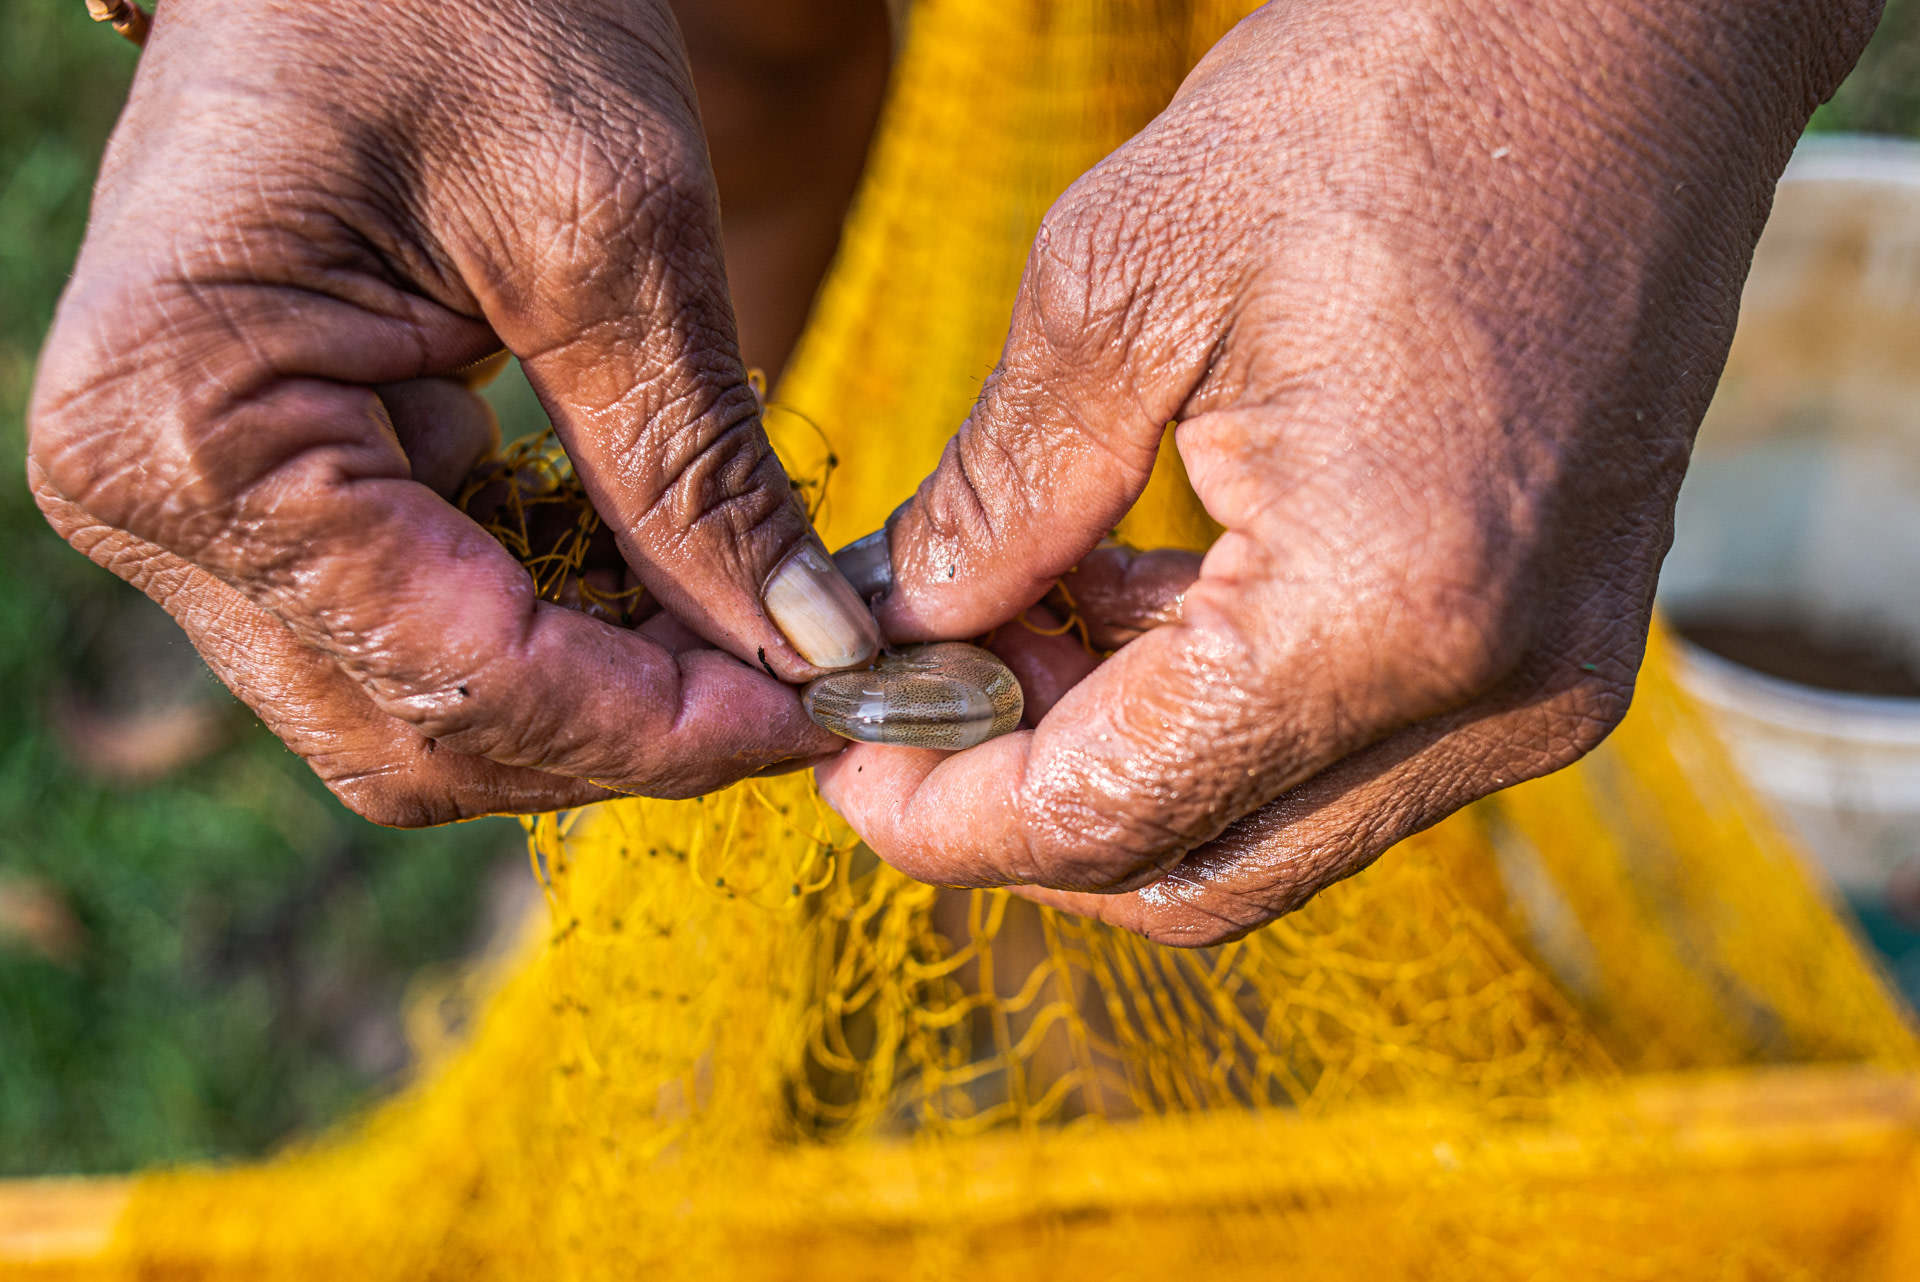 A worker removes a shrimp from a harvesting net at an aquafarm. Matlapalem, Andhra Pradesh, India, 2022. S. Chakrabarti / We Animals Media